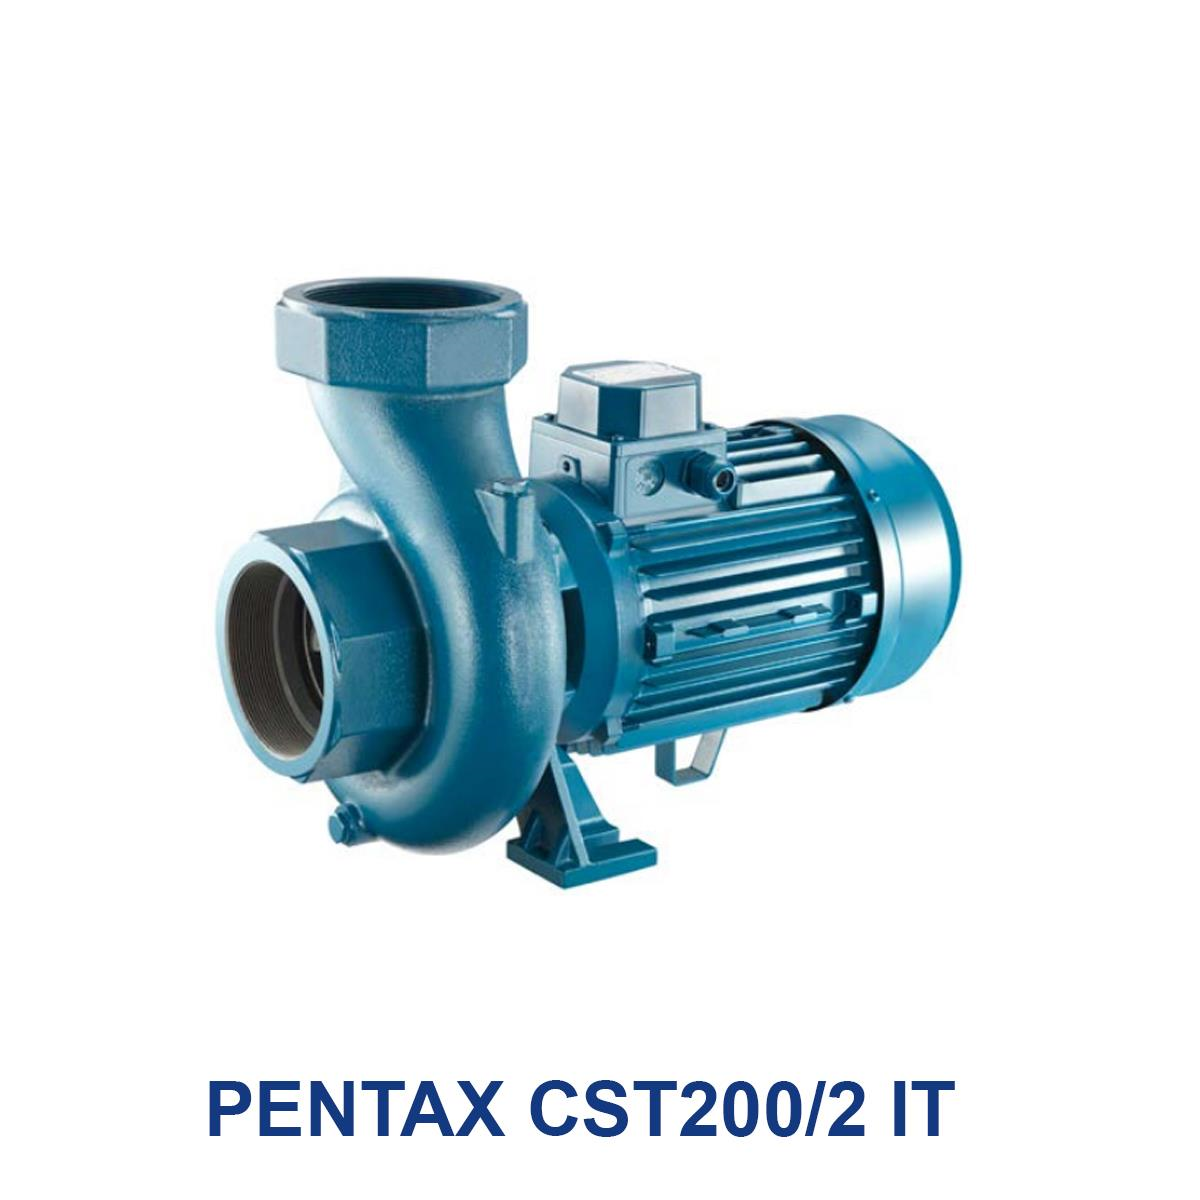 PENTAX-CST200-2-IT